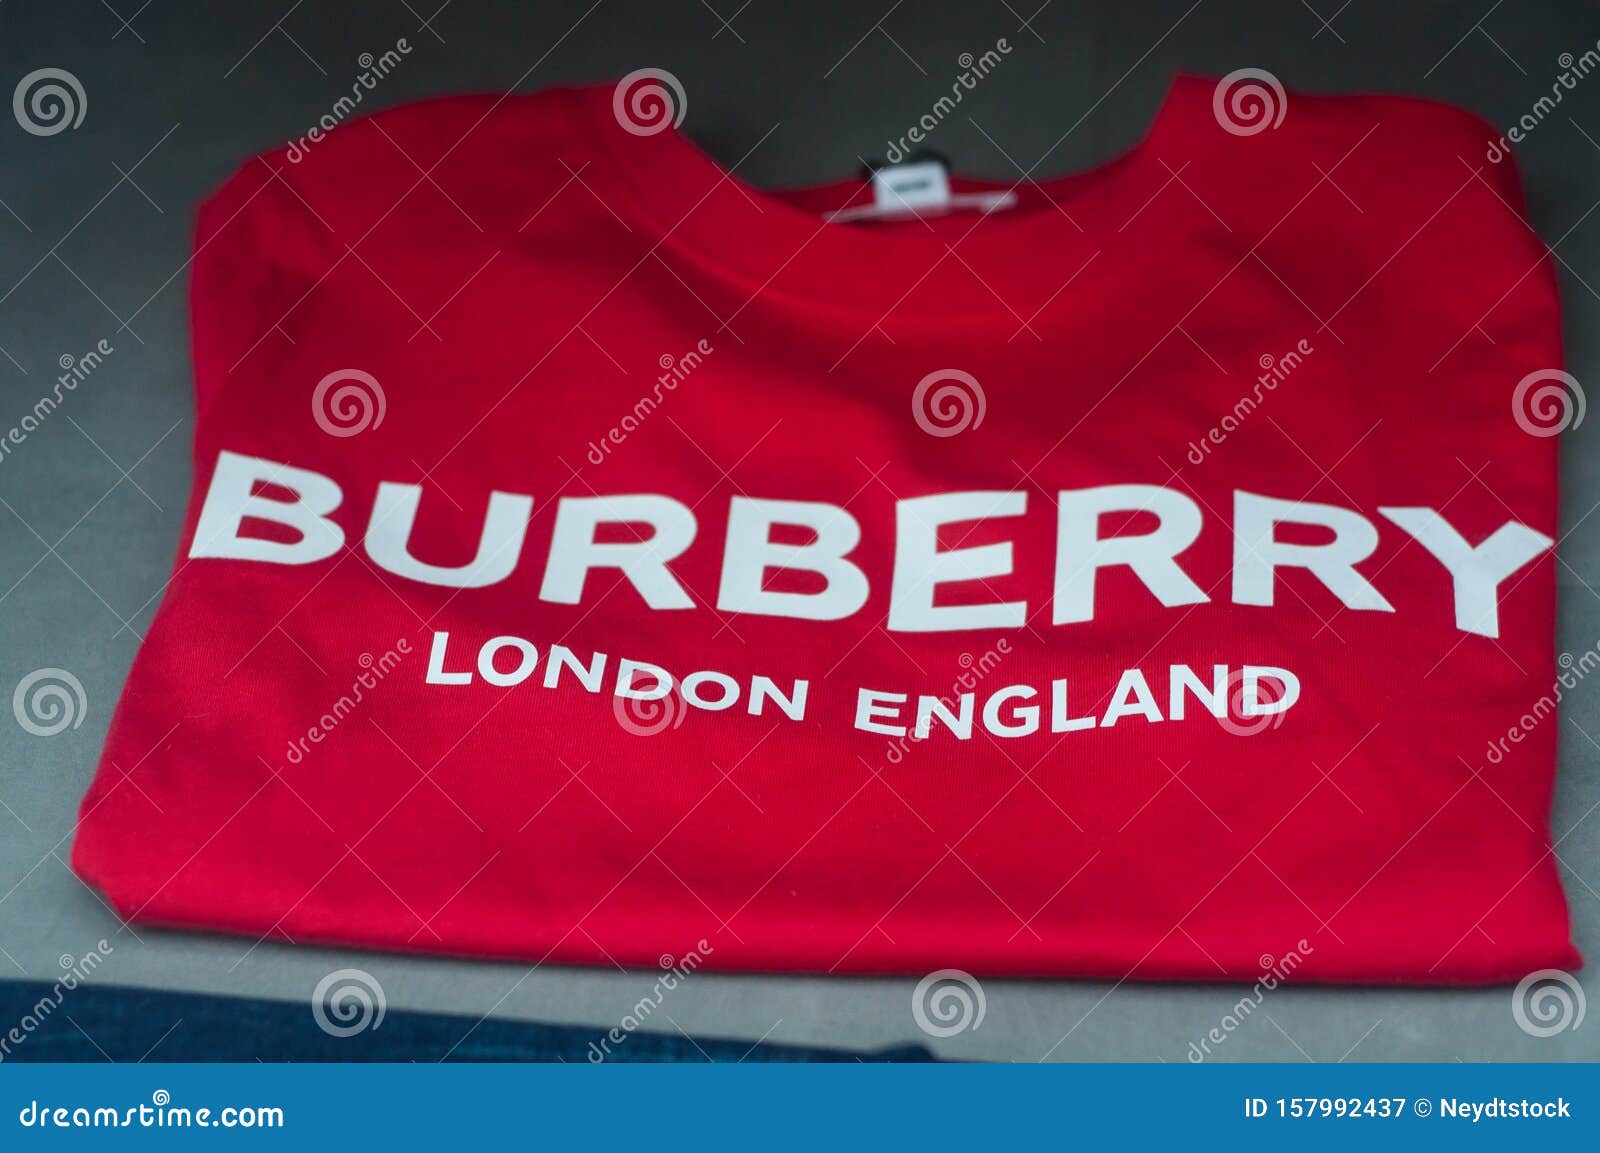 burberry thumbs up shirt